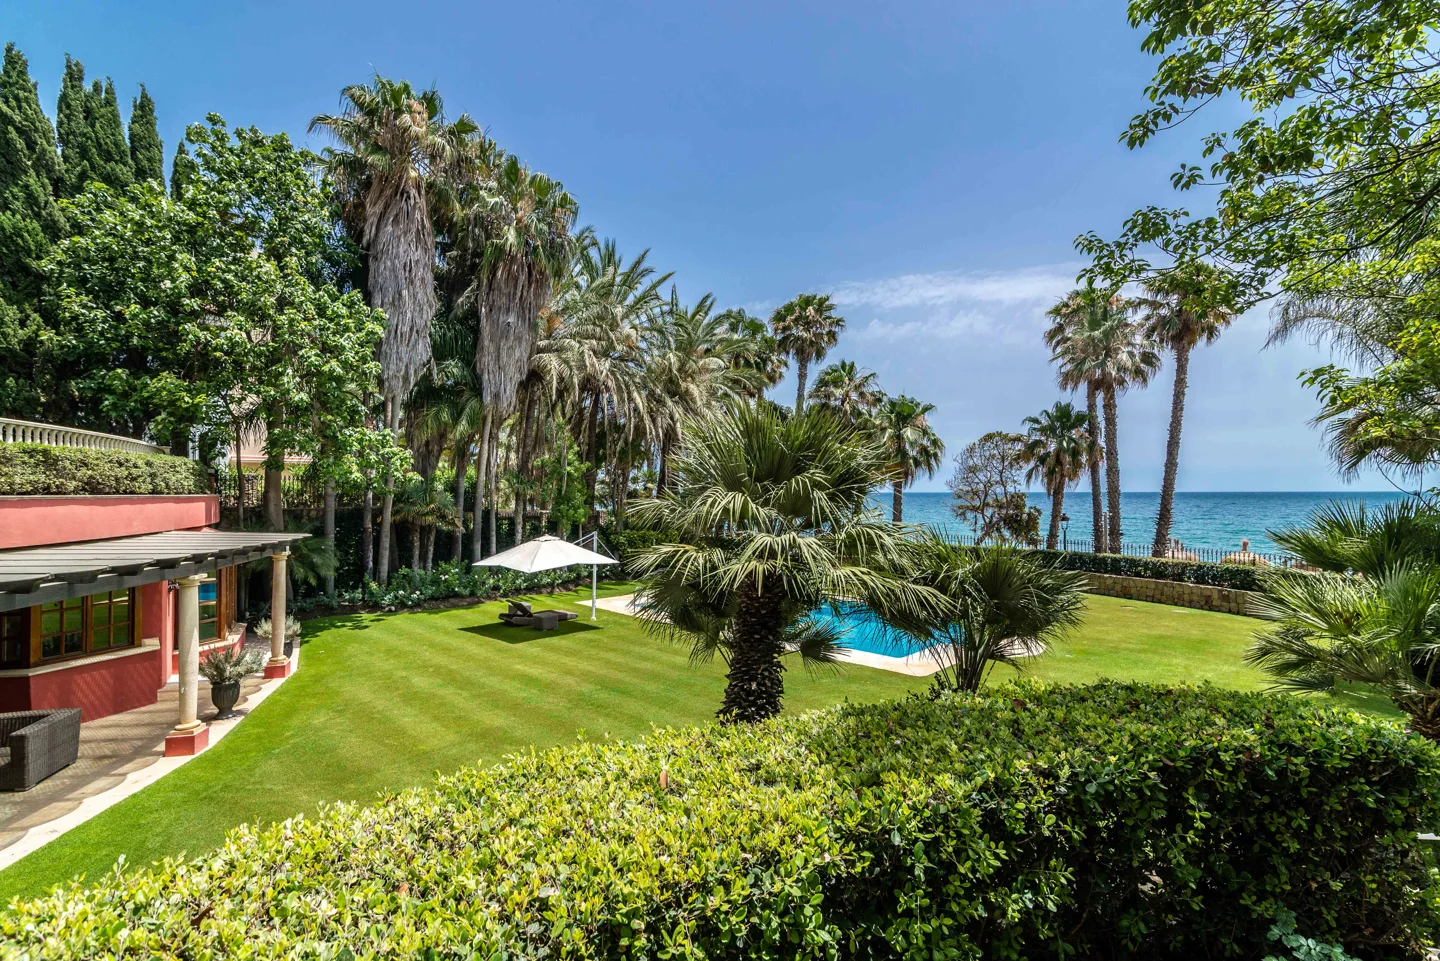 Exclusive Beachfront Villa Marbella Golden Mile. Price from €55,000 per week